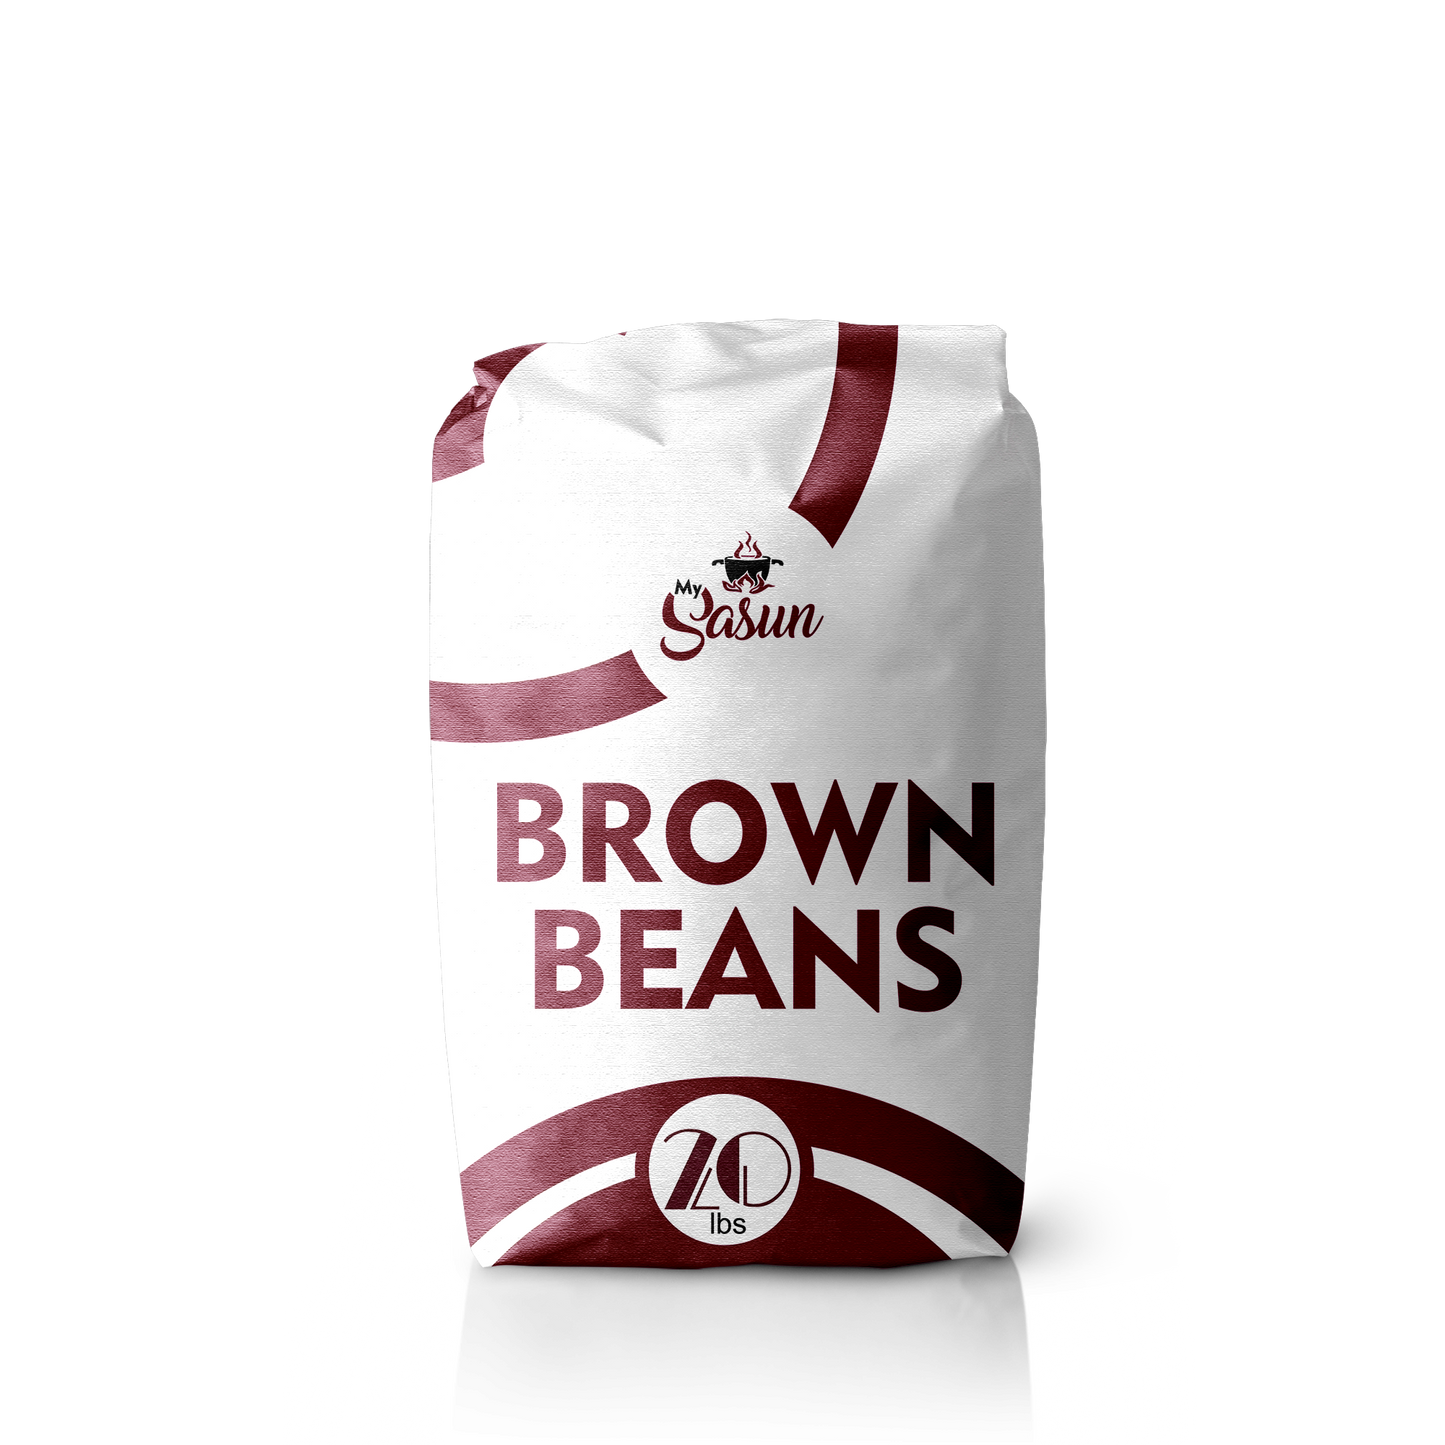 Sasun Brown Beans